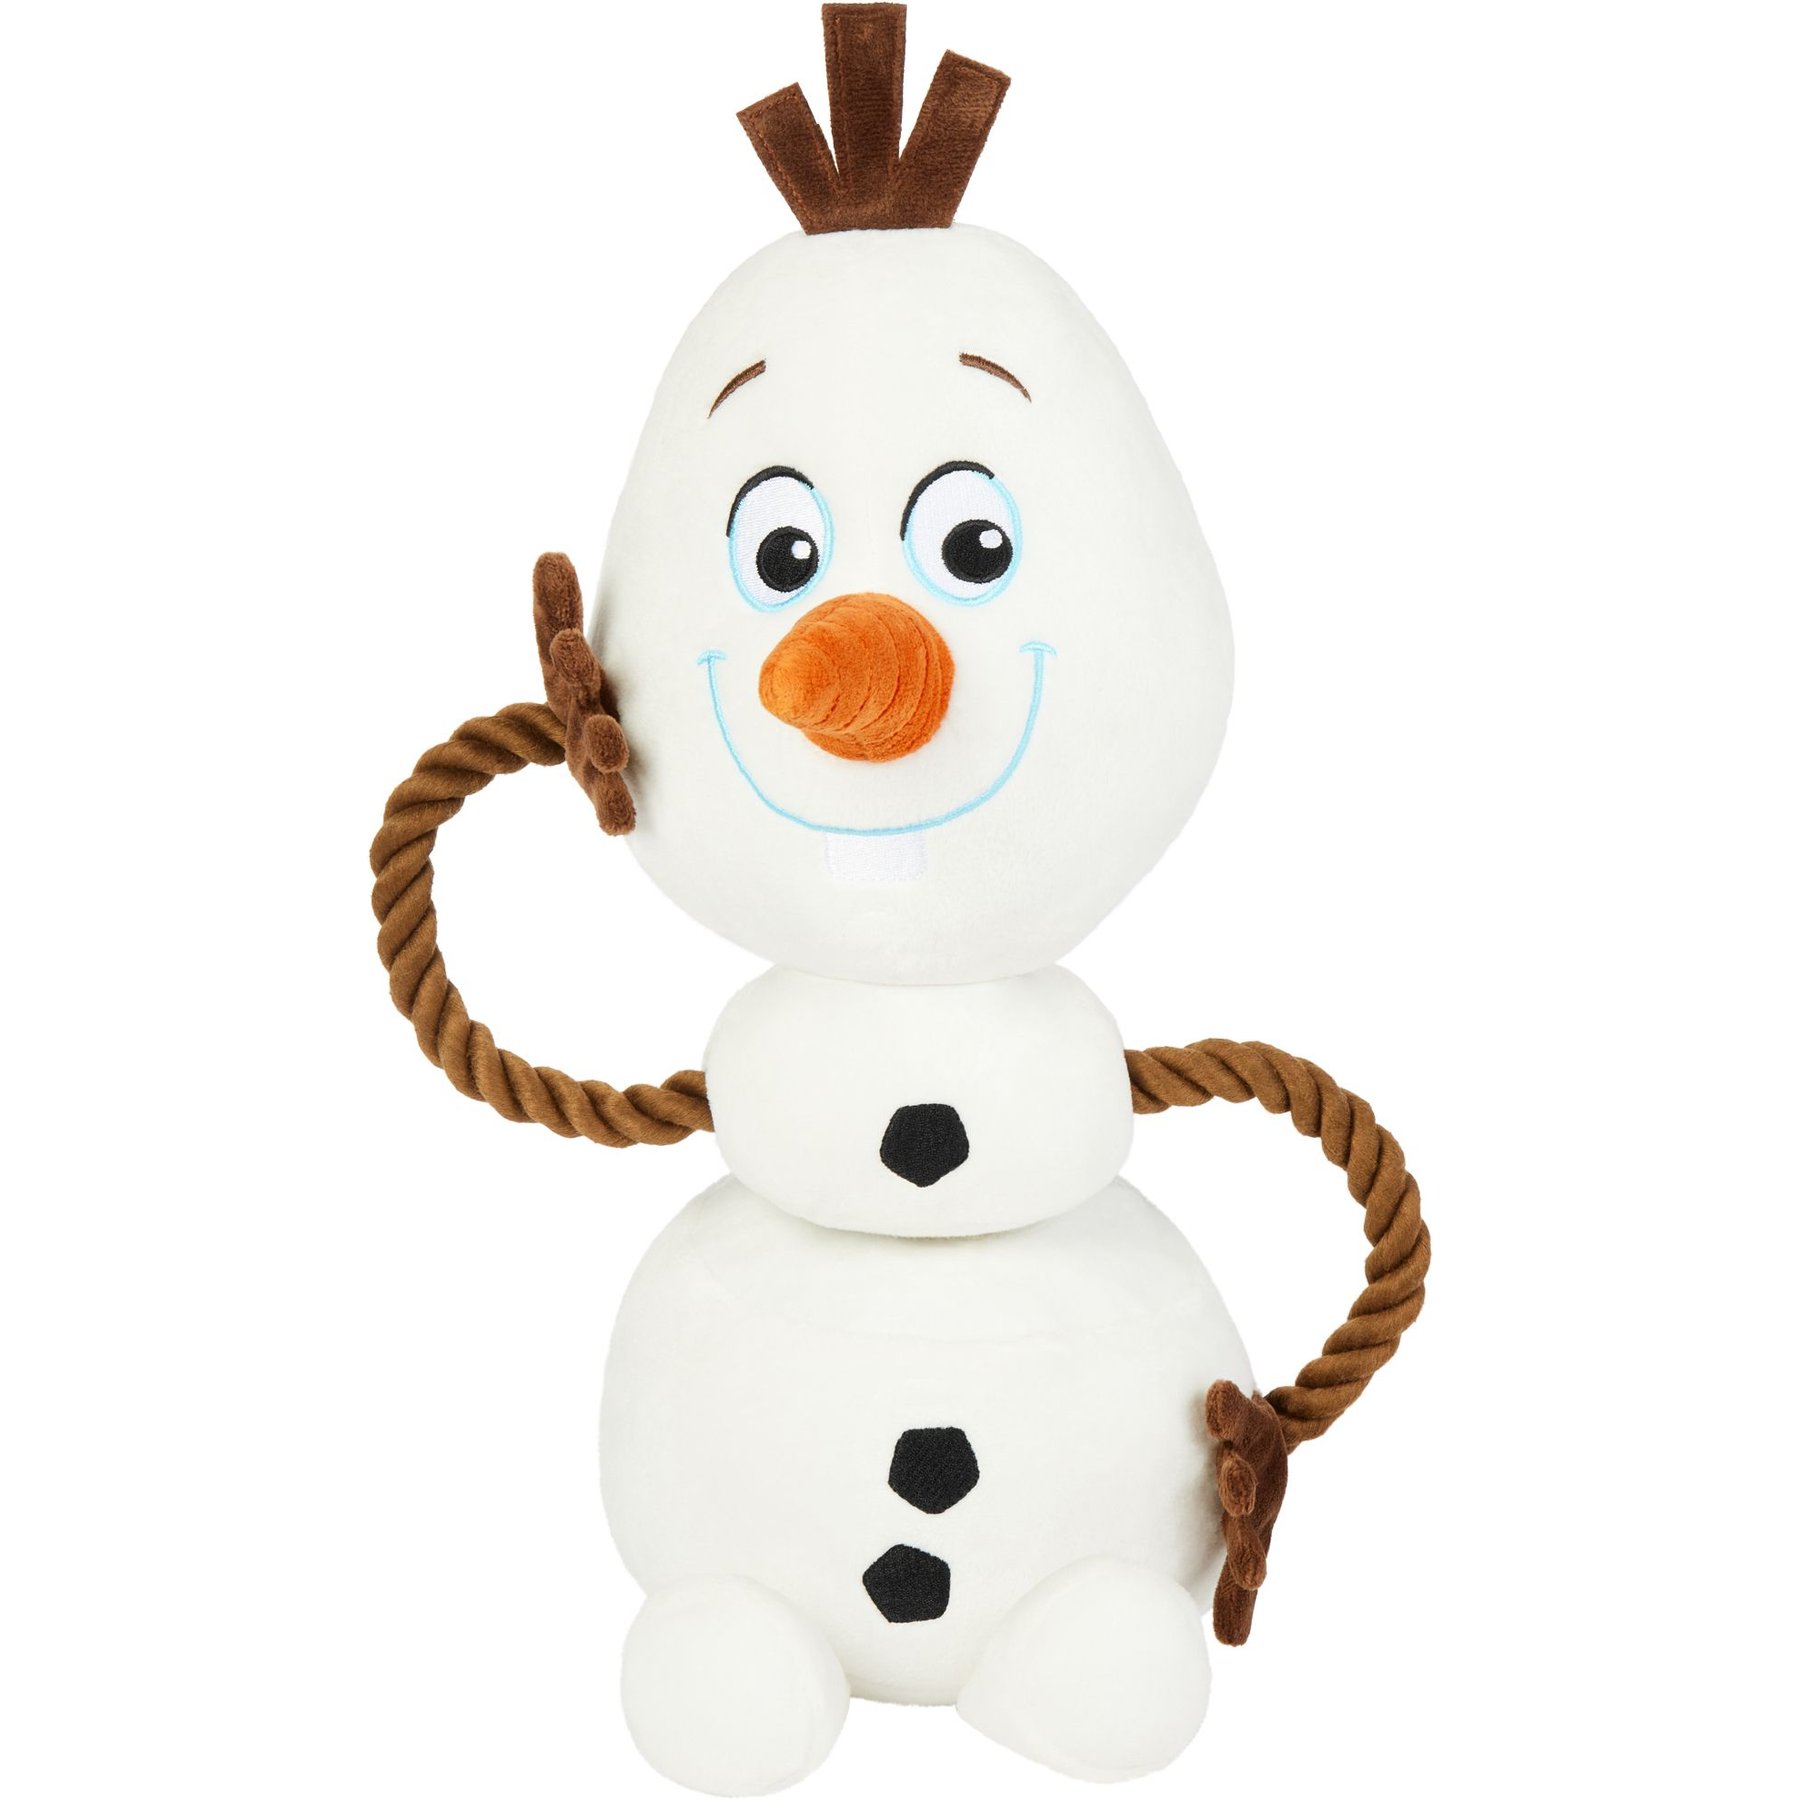 Disney Frozen's Olaf Plush with Rope Squeaky Dog Toy, Medium/Large